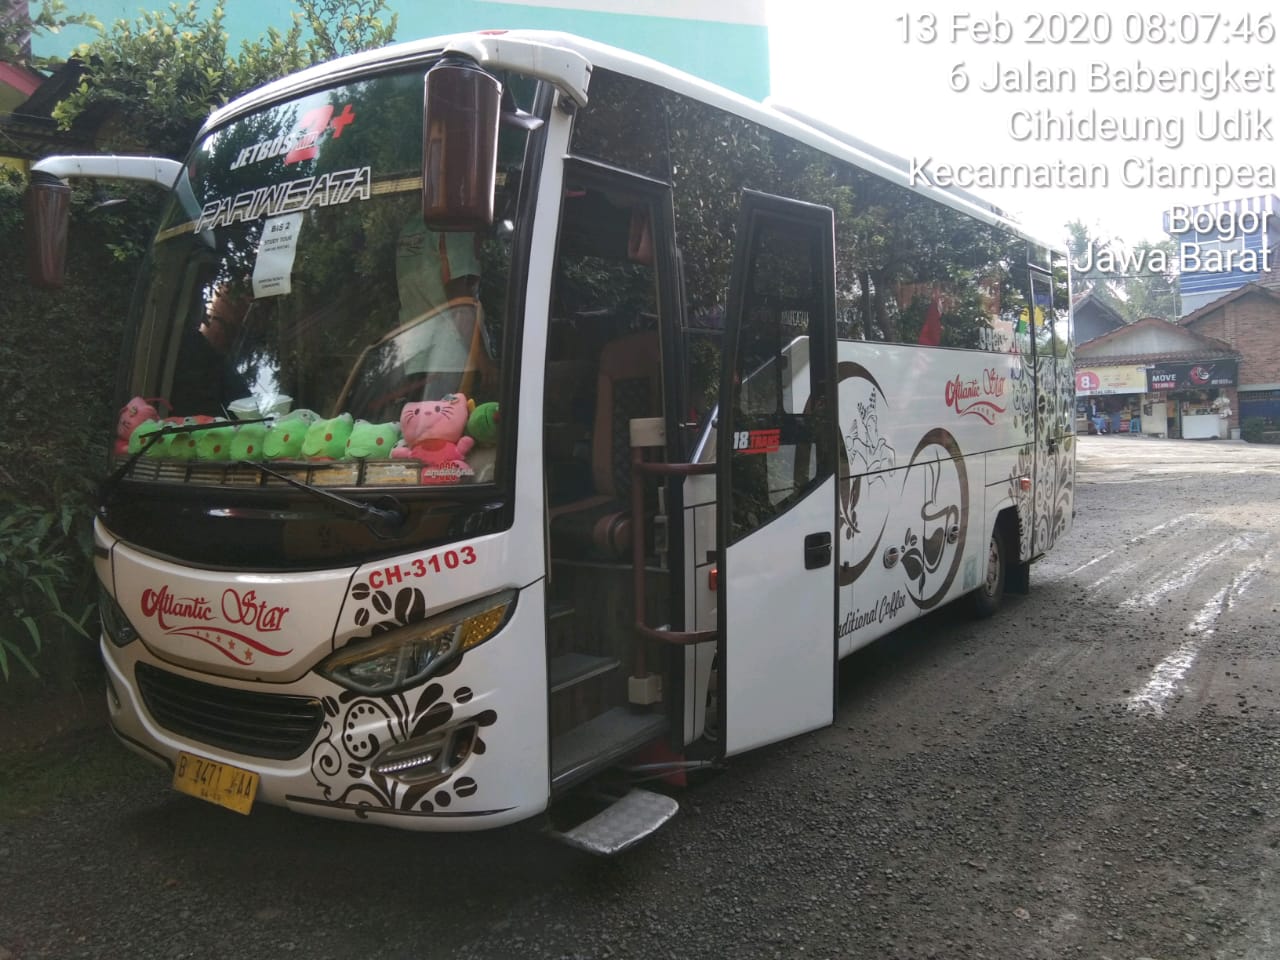 Sewa Bus Pariwisata Jakarta